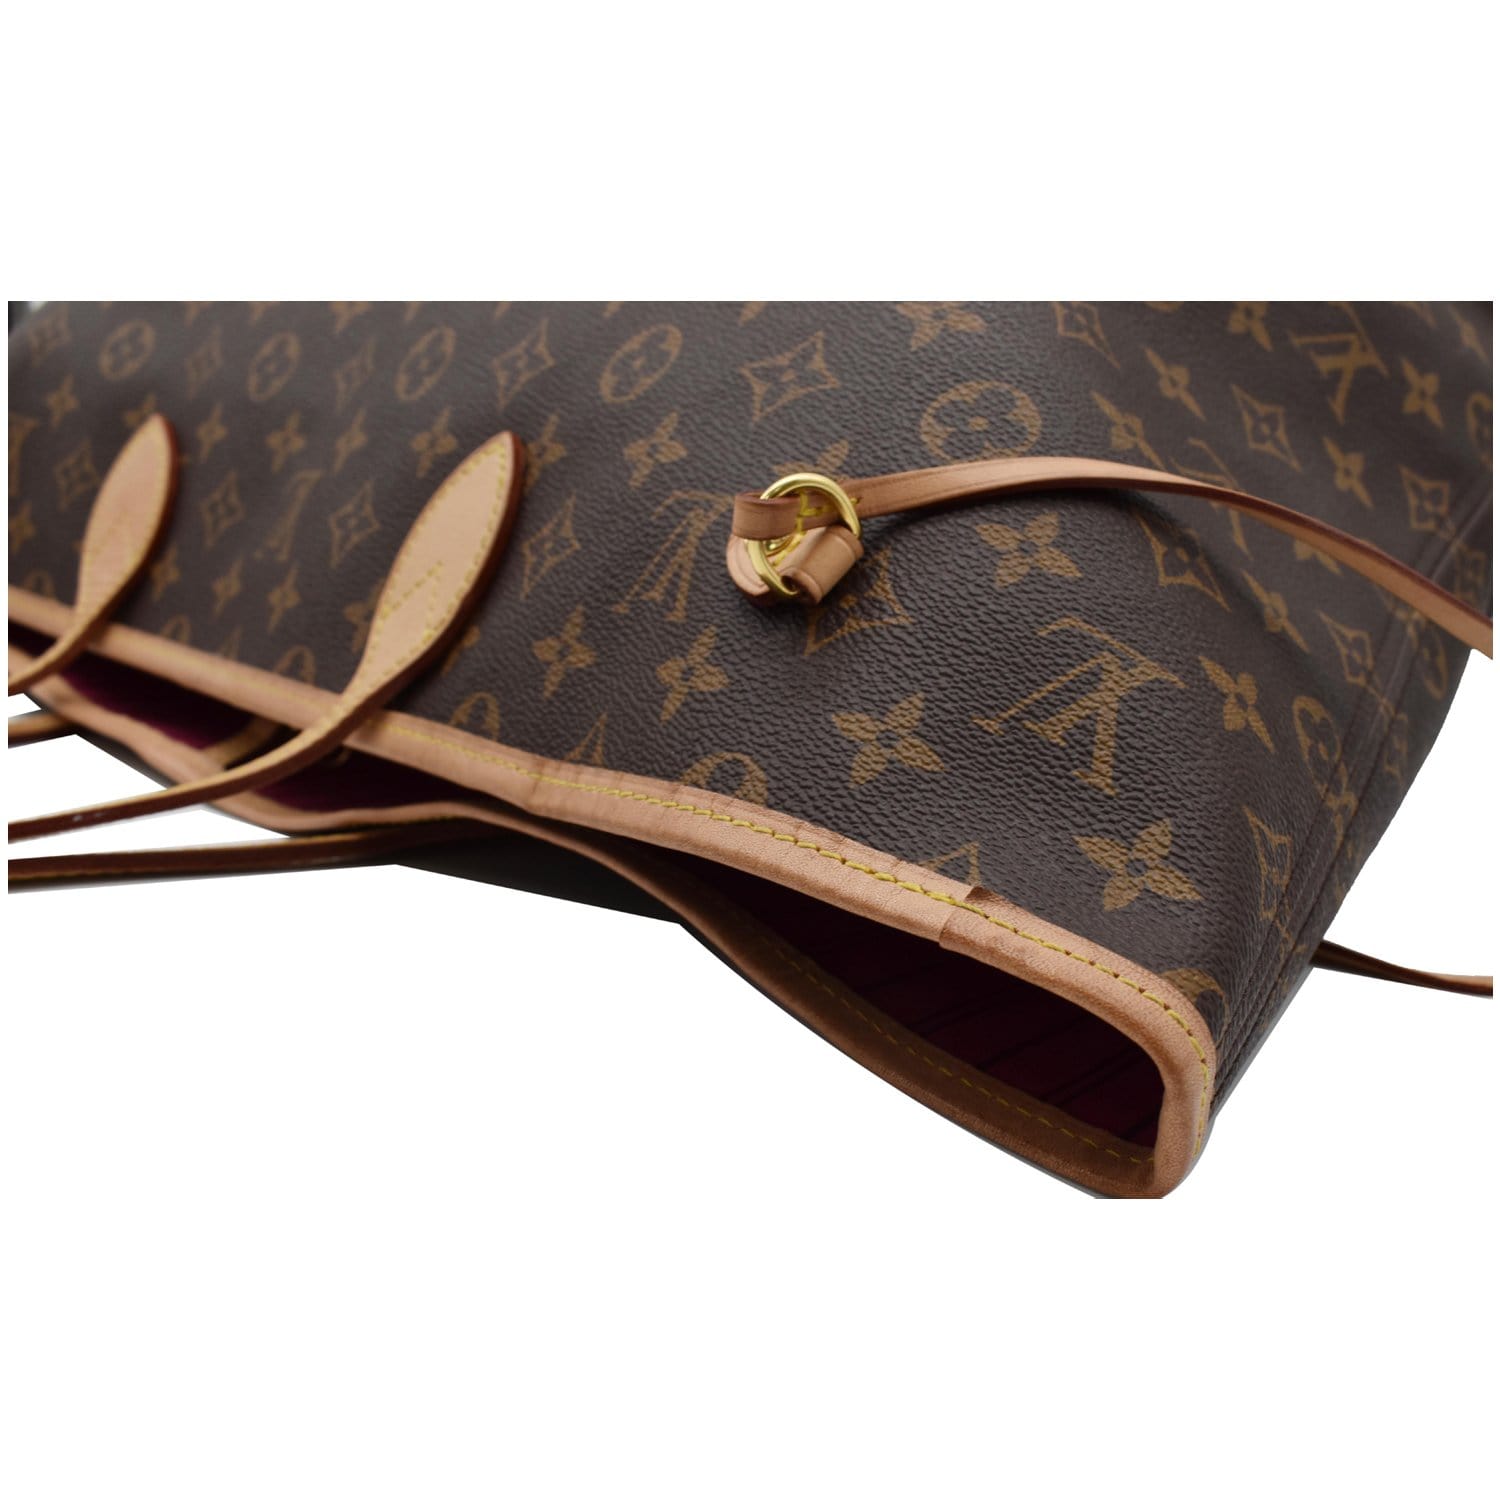 Brown Louis Vuitton Monogram Neverfull GM Tote Bag, RvceShops Revival